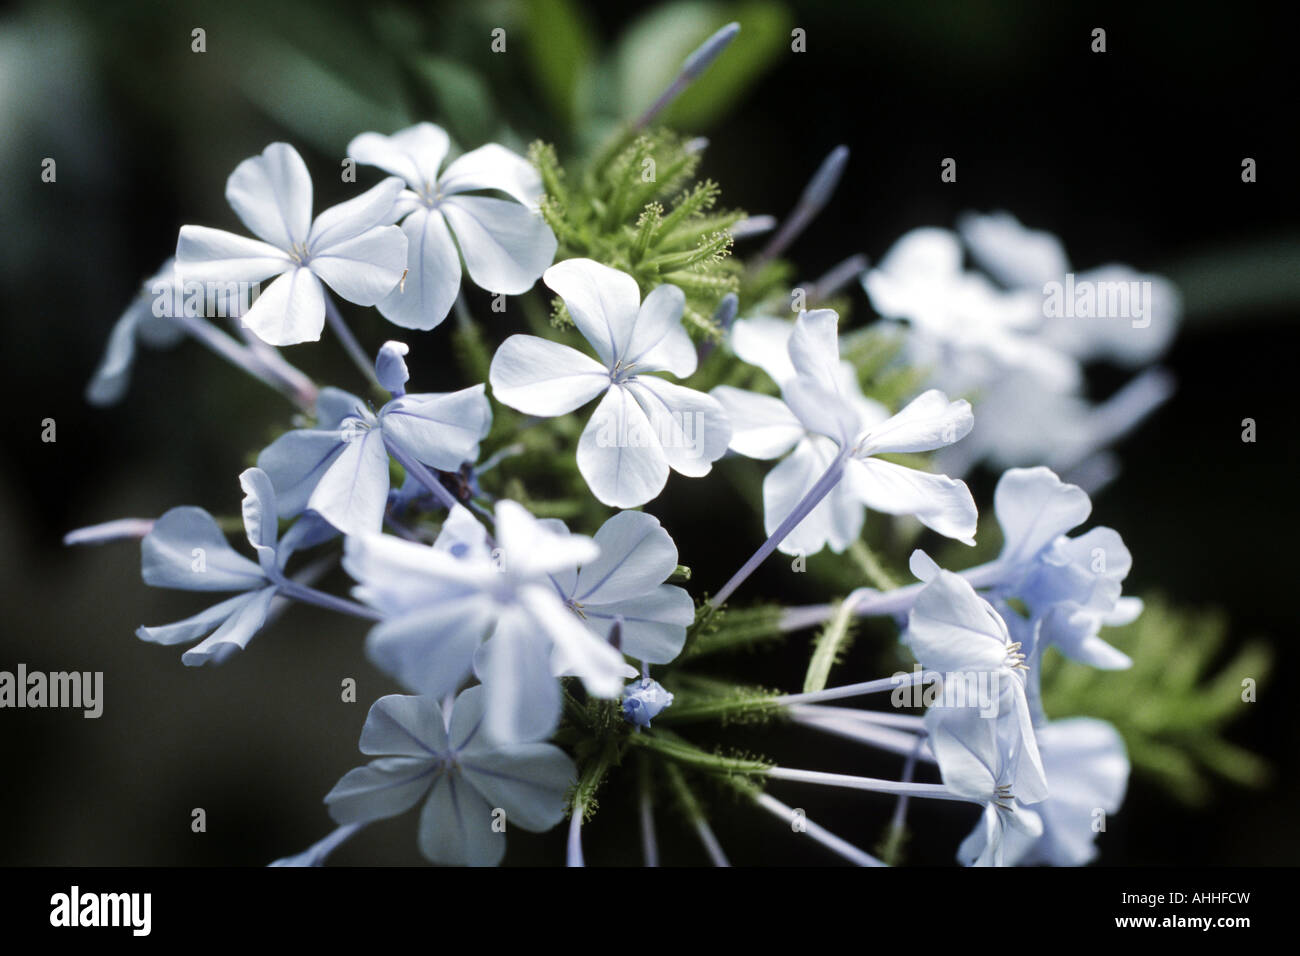 Cape Leadwort, Skyflower, Cape Plumbago (Plumbago auriculata, Plumbago capensis), flowers Stock Photo